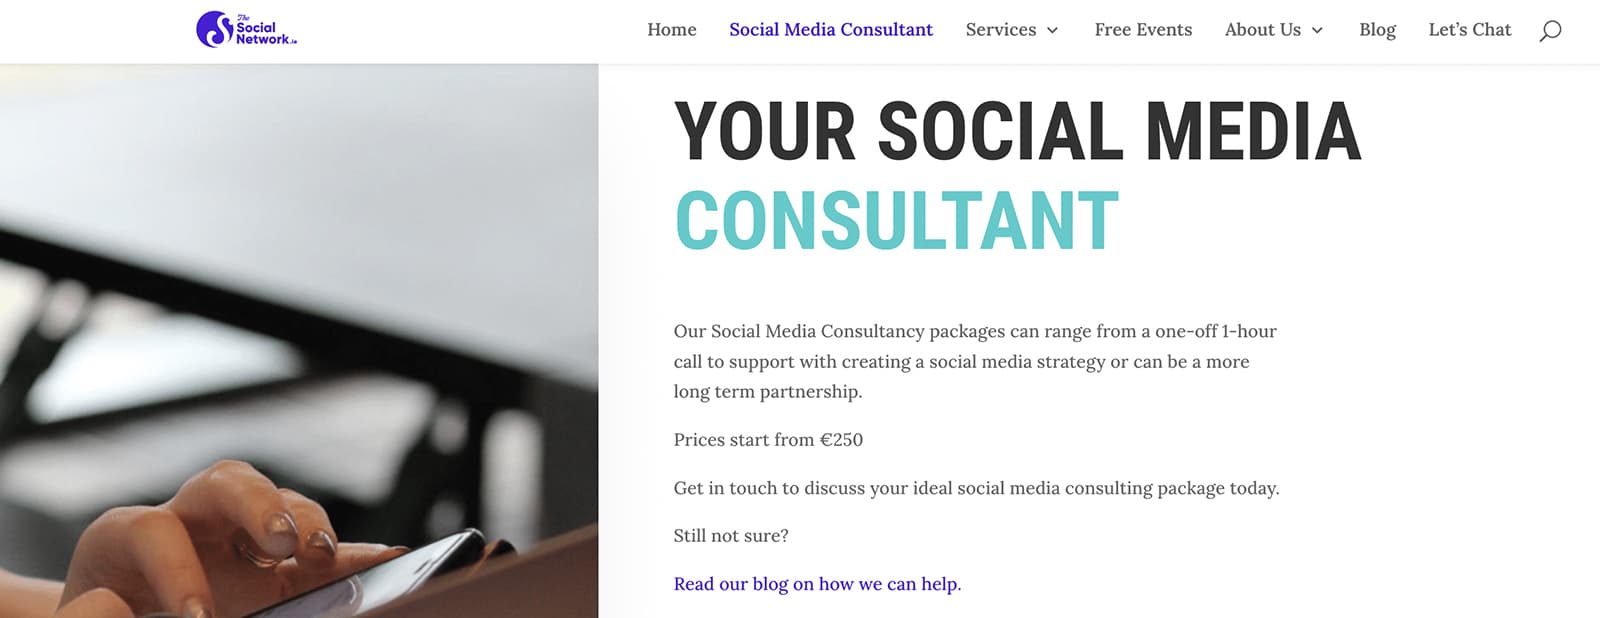 social media consultancy - The Social Network